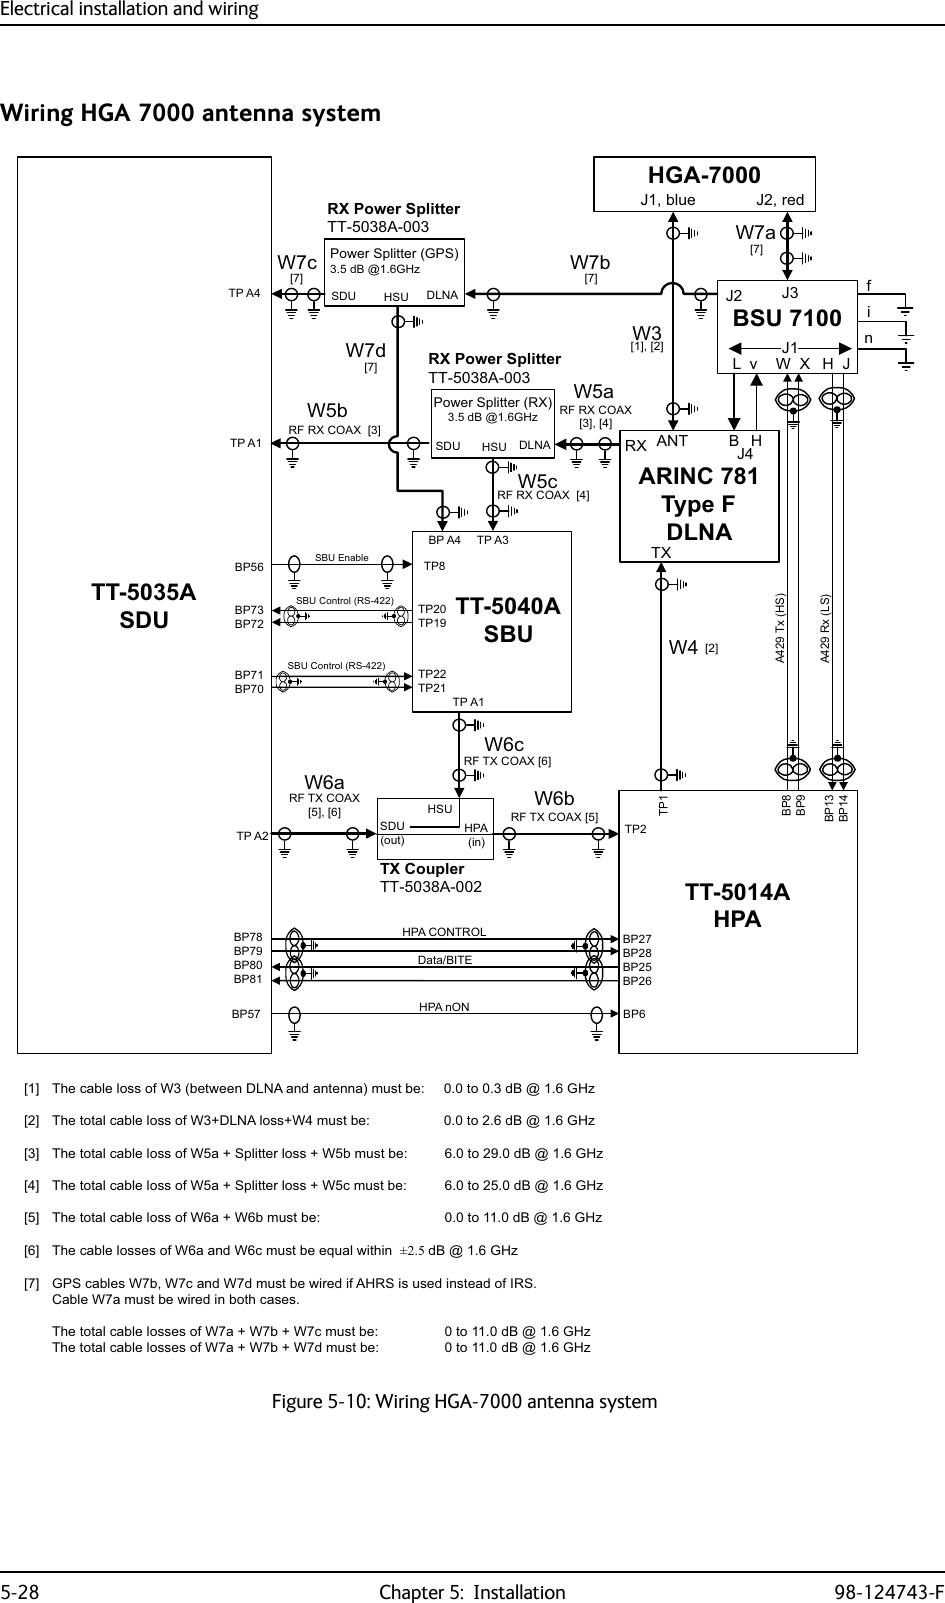 Electrical installation and wiring5-28 Chapter 5:  Installation 98-124743-FWiring HGA 7000 antenna systemFigure 5-10: Wiring HGA-7000 antenna system7;&amp;RXSOHU77$77$6&apos;8%68$5,1&amp;7\SH)&apos;/1$3RZHU6SOLWWHU5;G%#*+]+686&apos;8 &apos;/1$5;3RZHU6SOLWWHU77$77$6%86%8&amp;RQWURO56%3%3%3%3%373737373736%8&amp;RQWURO566%8(QDEOH73$73$6&apos;8RXW+3$LQ+687377$+3$73%3%3%3%3+3$Q21%3 %3%3%3%3%3+3$&amp;21752/&apos;DWD%,7(73$73$5)5;&amp;2$;&gt;@&gt;@5)5;&amp;2$;&gt;@:&gt;@5)7;&amp;2$;&gt;@5)7;&amp;2$;&gt;@&gt;@ 5)7;&amp;2$;&gt;@5)5;&amp;2$;&gt;@&gt;@ 7KHFDEOHORVVRI:EHWZHHQ&apos;/1$DQGDQWHQQDPXVWEH WRG%#*+]&gt;@ 7KHWRWDOFDEOHORVVRI:&apos;/1$ORVV:PXVWEH WRG%#*+]&gt;@ 7KHWRWDOFDEOHORVVRI:D6SOLWWHUORVV:EPXVWEH WRG%#*+]&gt;@ 7KHWRWDOFDEOHORVVRI:D6SOLWWHUORVV:FPXVWEH WRG%#*+]&gt;@ 7KHWRWDOFDEOHORVVRI:D:EPXVWEH WRG%#*+]&gt;@ 7KHFDEOHORVVHVRI:DDQG:FPXVWEHHTXDOZLWKLQG%#*+]&gt;@ *36FDEOHV:E:FDQG:GPXVWEHZLUHGLI$+56LVXVHGLQVWHDGRI,56&amp;DEOH:DPXVWEHZLUHGLQERWKFDVHV7KHWRWDOFDEOHORVVHVRI:D:E:FPXVWEH WRG%#*+] 7KHWRWDOFDEOHORVVHVRI:D:E:GPXVWEH WRG%#*+]:&gt;@&gt;@:E:D:F:F:D :E%3%3%3%3$7[+6$5[/6:; +---%+--/Y$177;+*$5;3RZHU6SOLWWHU*36G%#*+]+686&apos;8 &apos;/1$5;3RZHU6SOLWWHU77$ :D:E&gt;@:F&gt;@-EOXH -UHG:G&gt;@73$%3$ILQ&gt;@